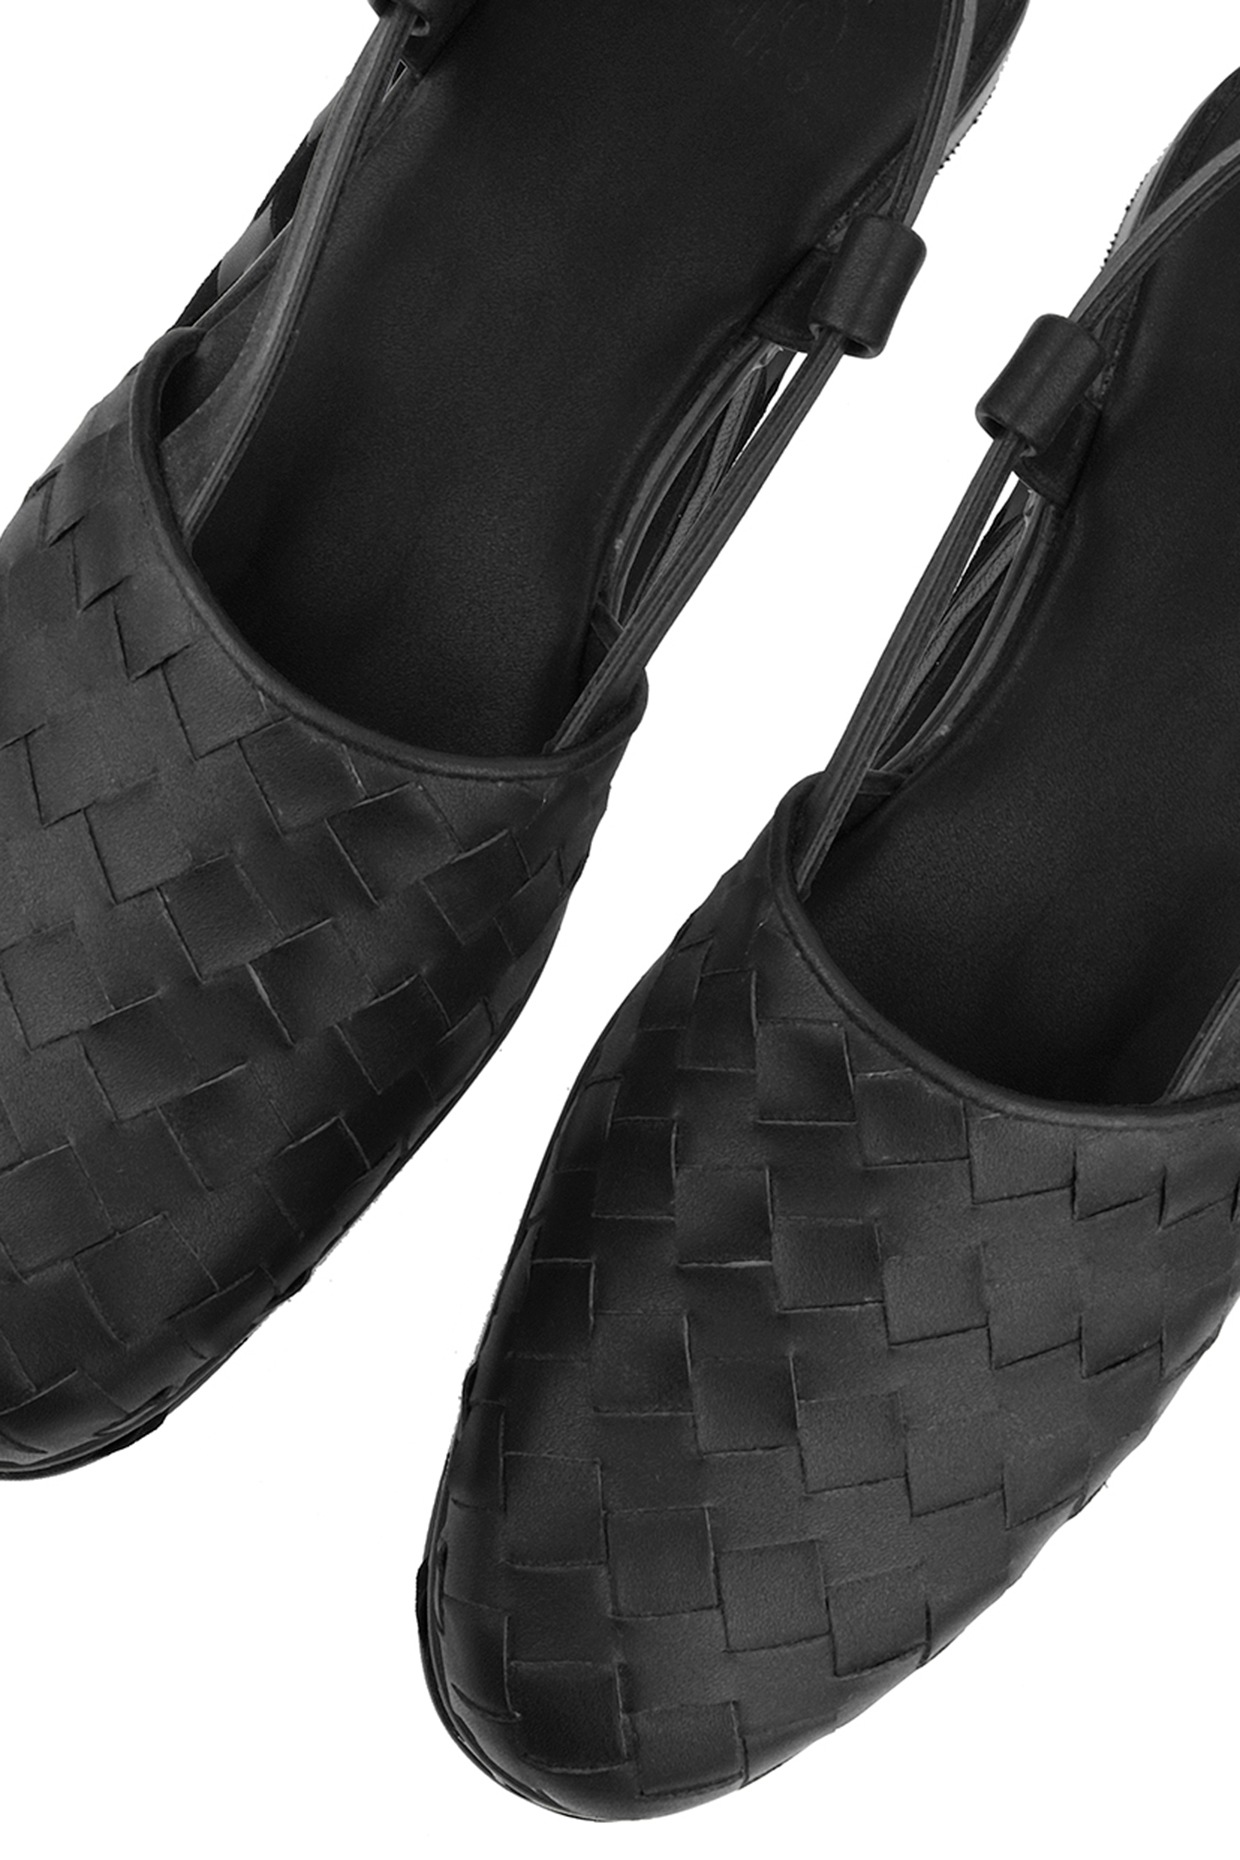 Buy Jolly Jolla Modern Black Peshawari Sandal on Snapdeal | PaisaWapas.com